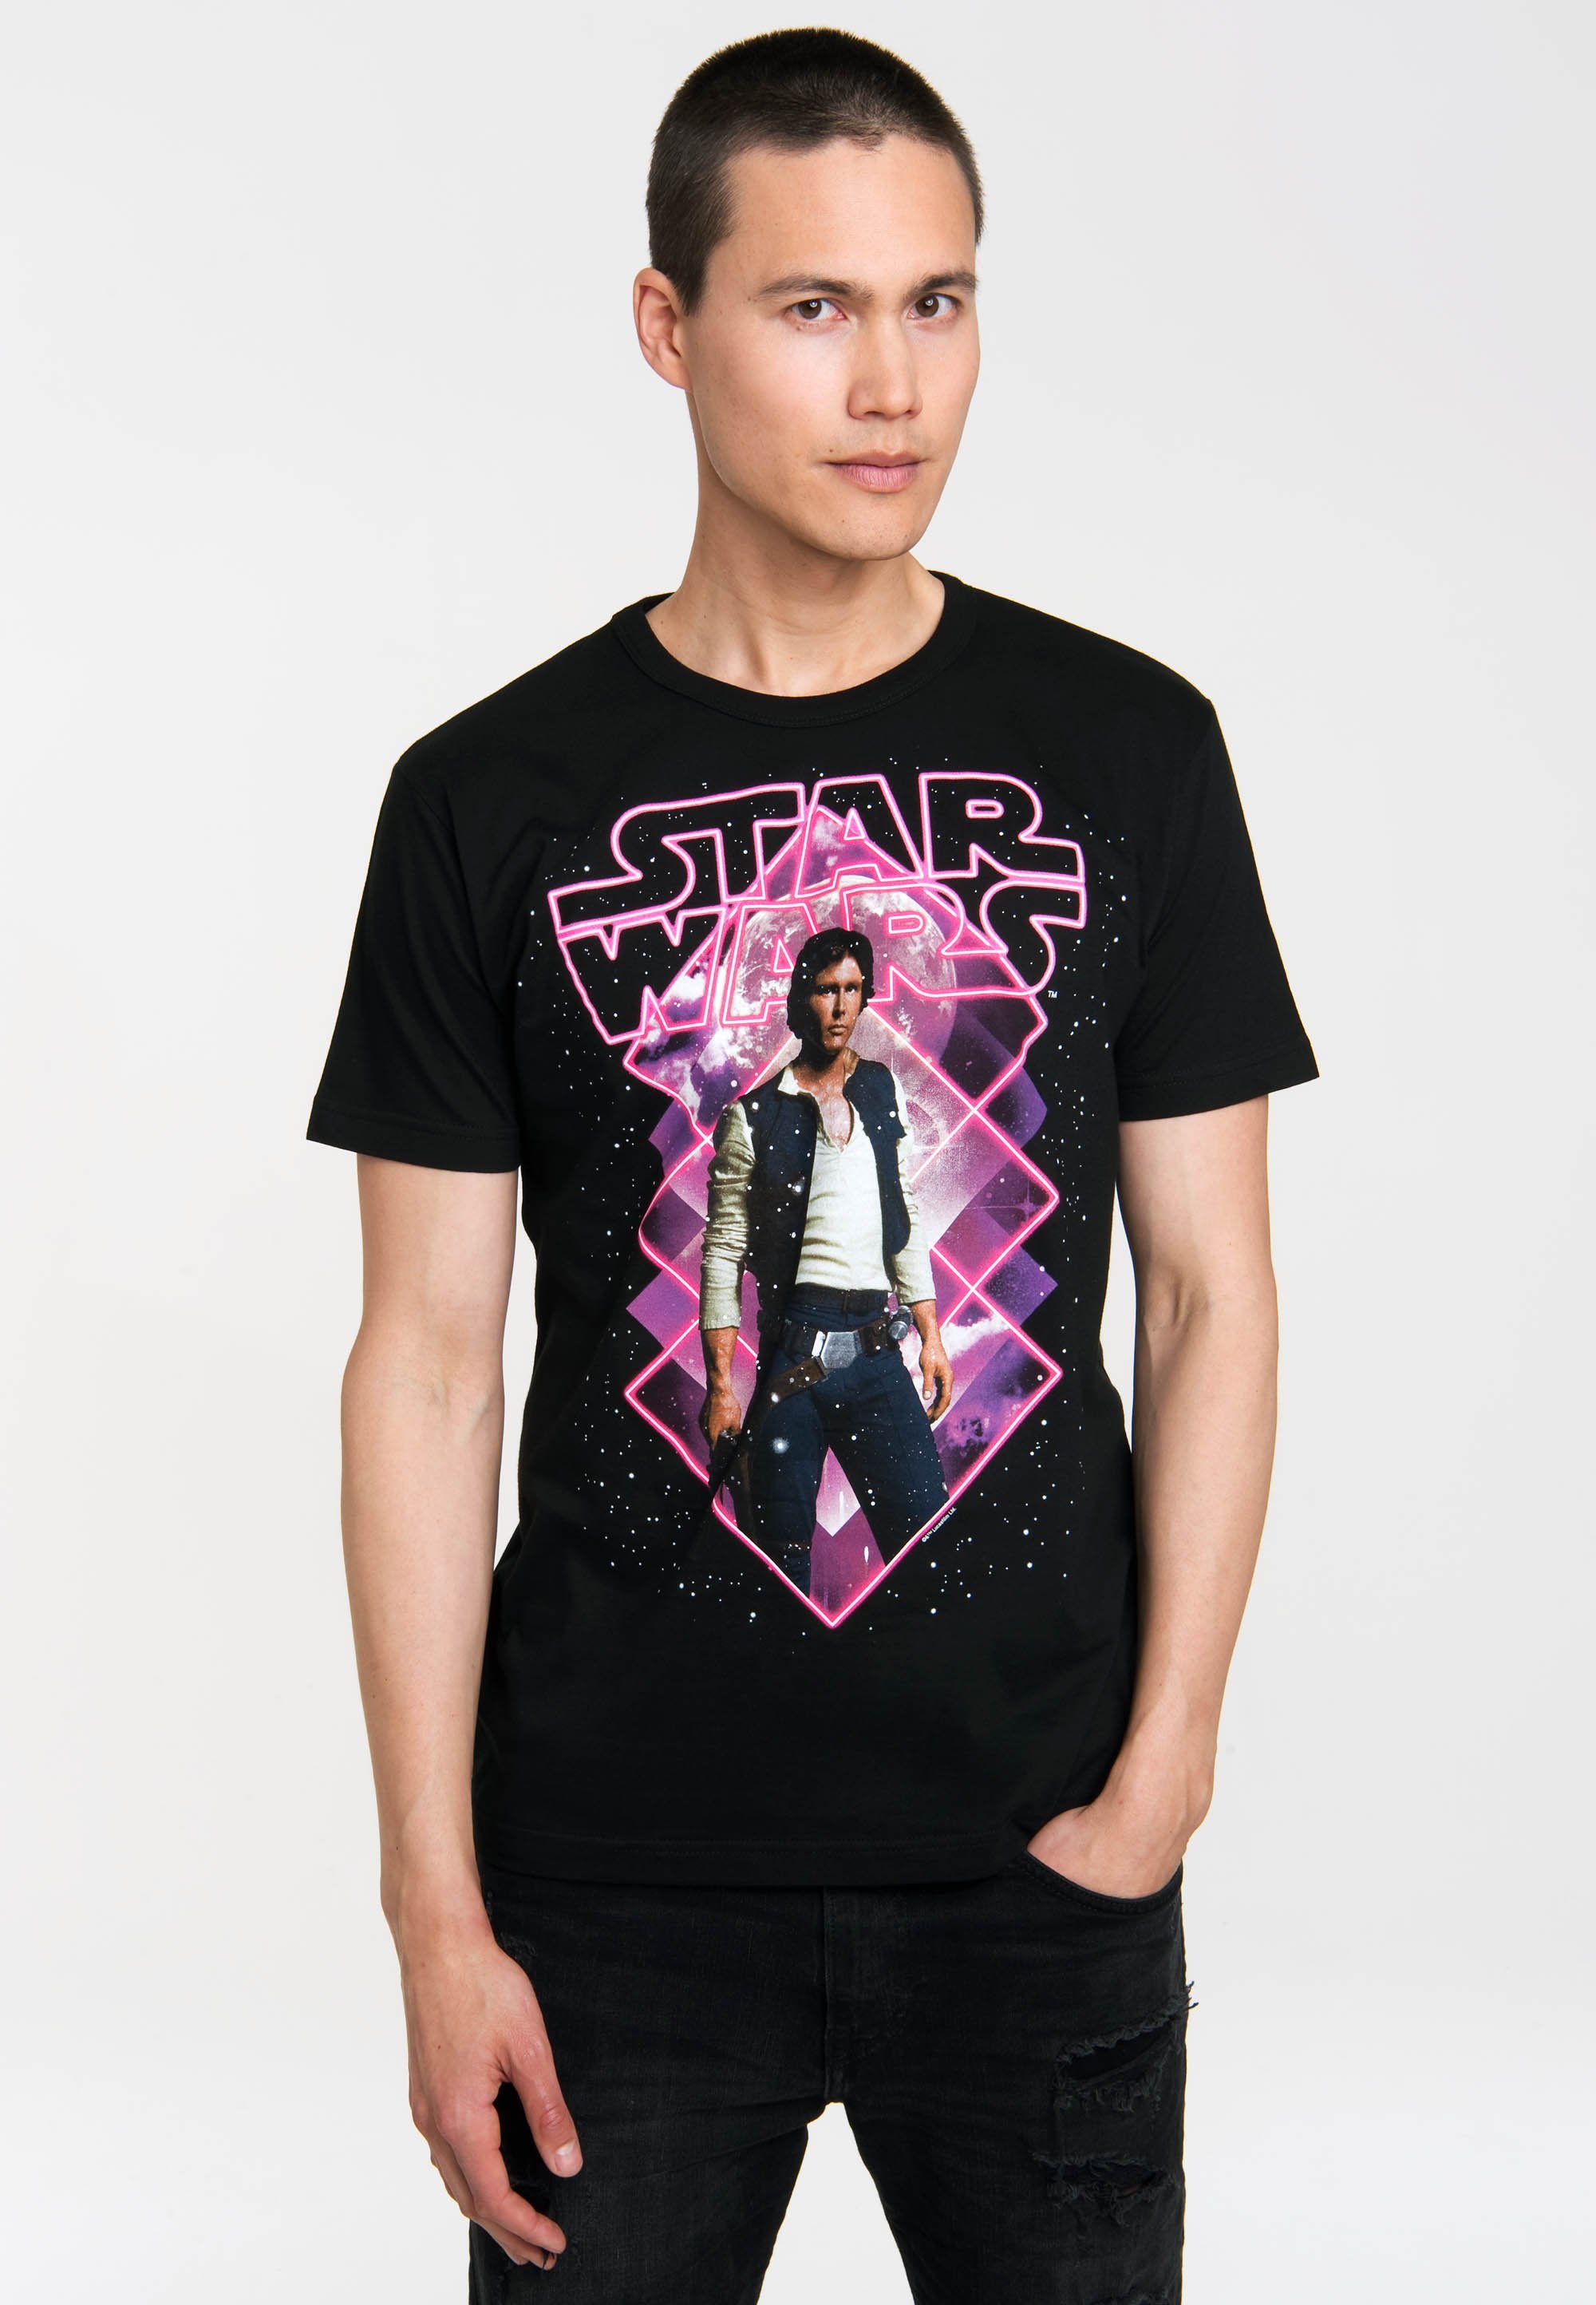 T-Shirt Siebdruck Han mit hochwertigem LOGOSHIRT Solo